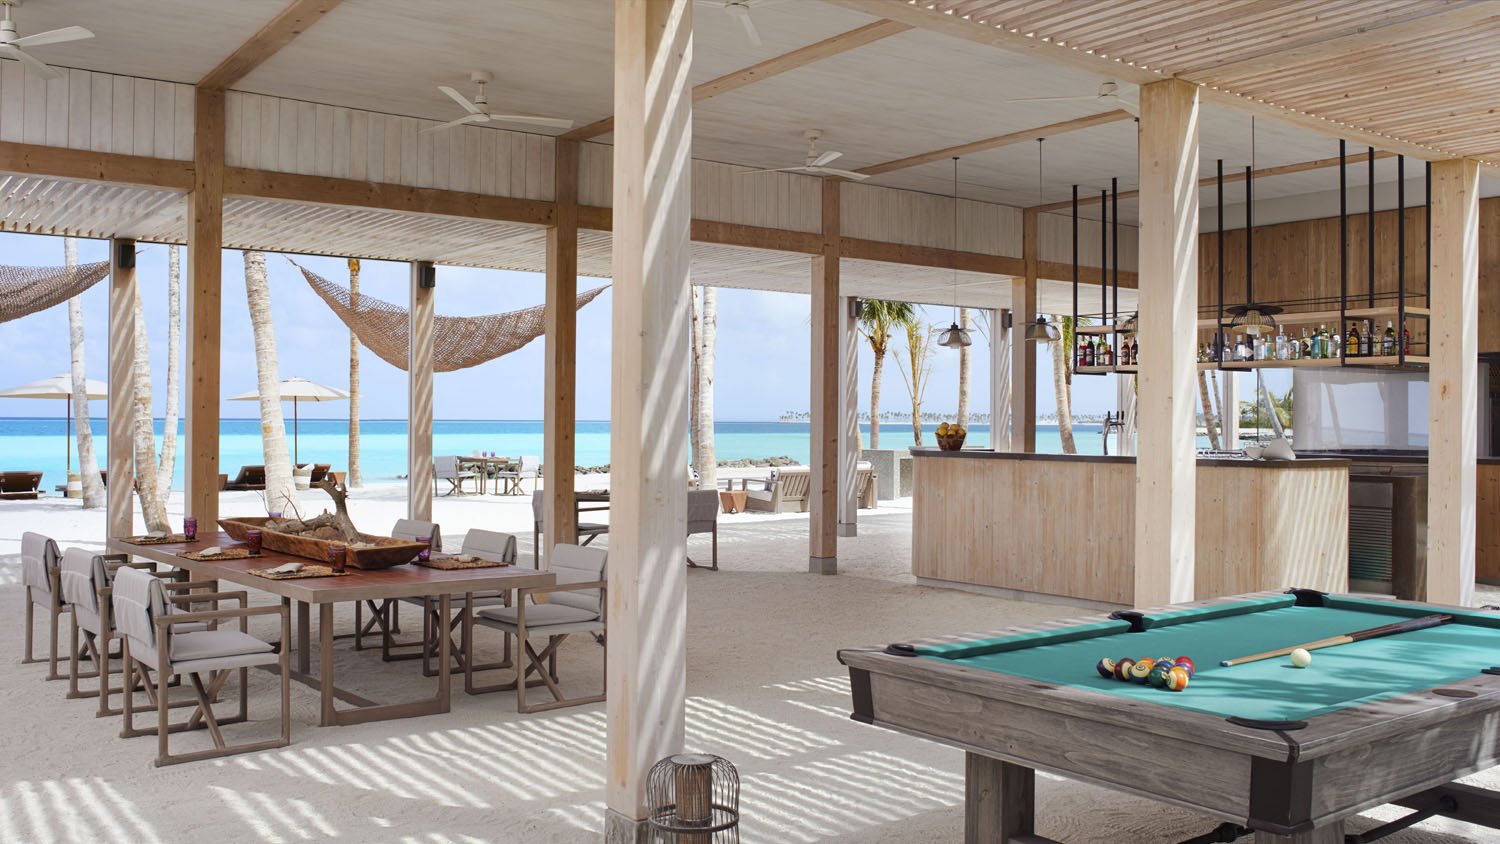 The Ritz-Carlton Maldives, Fari Islands - Beach Shack - Interior.jpg